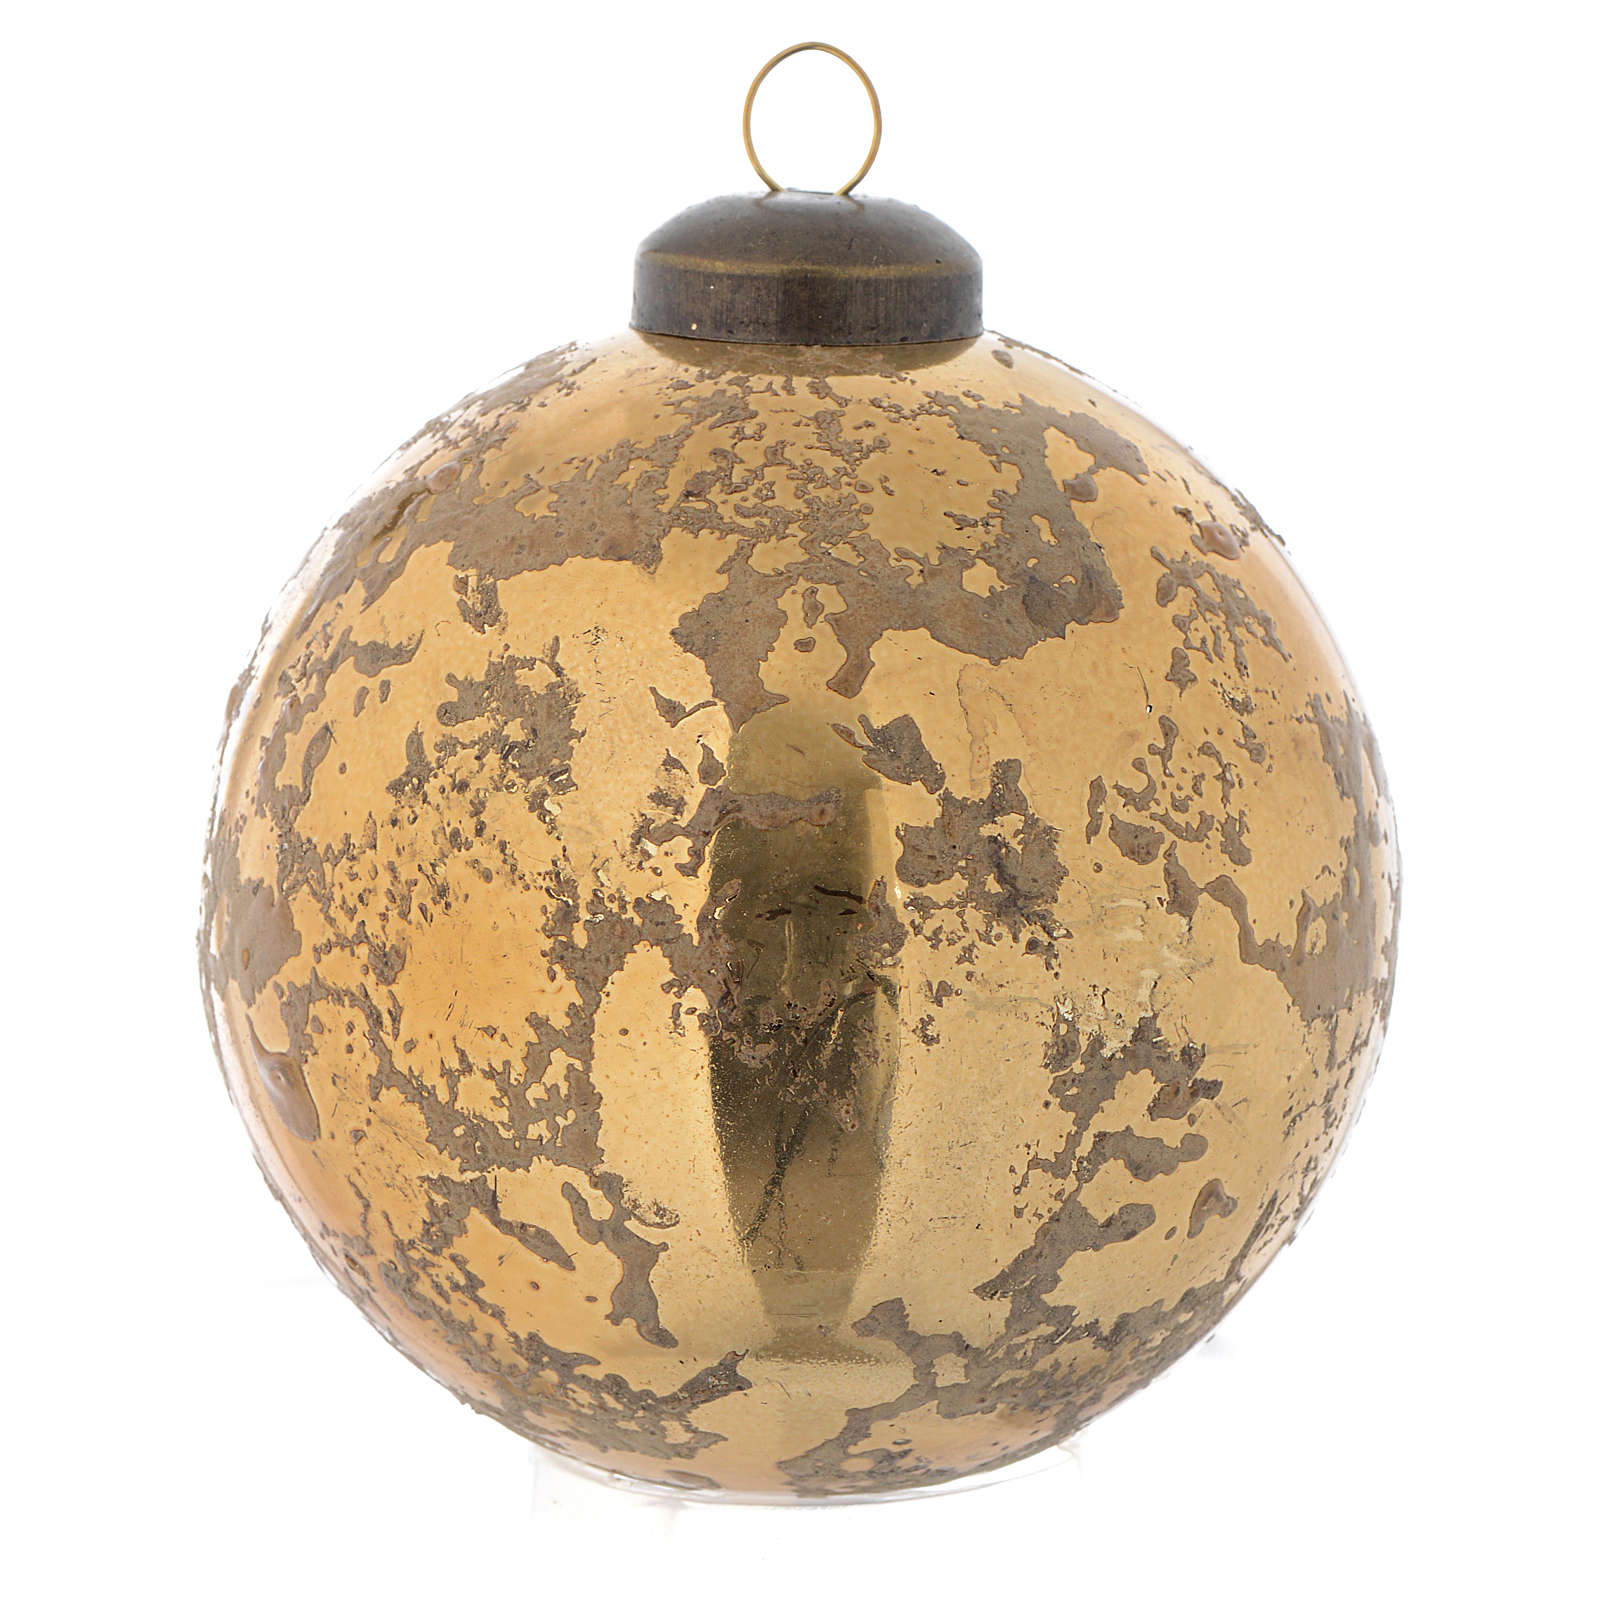 Glass Christmas Ornament Antique Gold Color 80mm Diameter Online